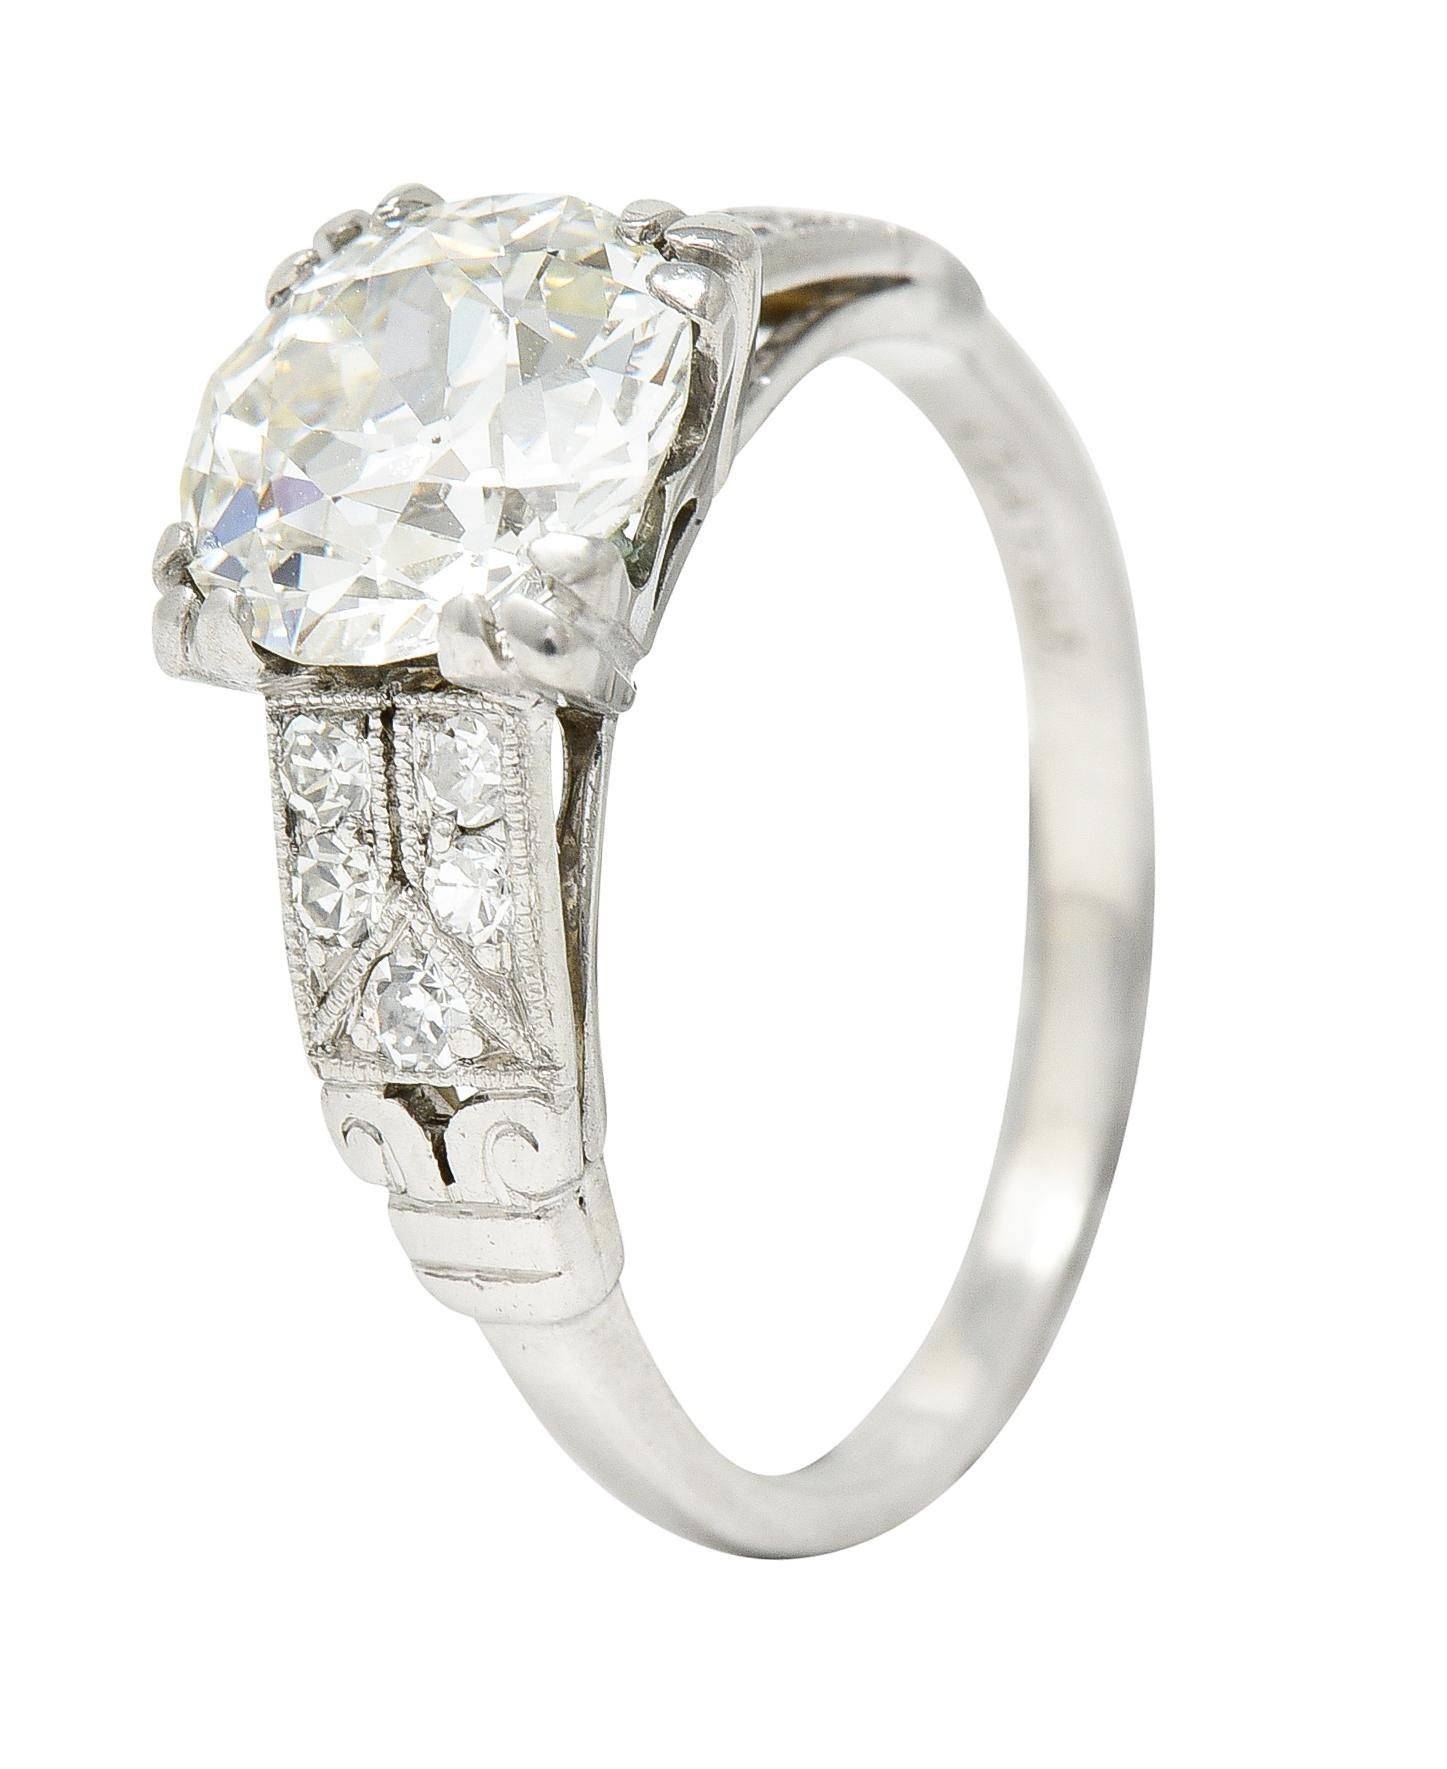 1930's Art Deco Old European 1.84 Carats Diamond Platinum Engagement Ring For Sale 3